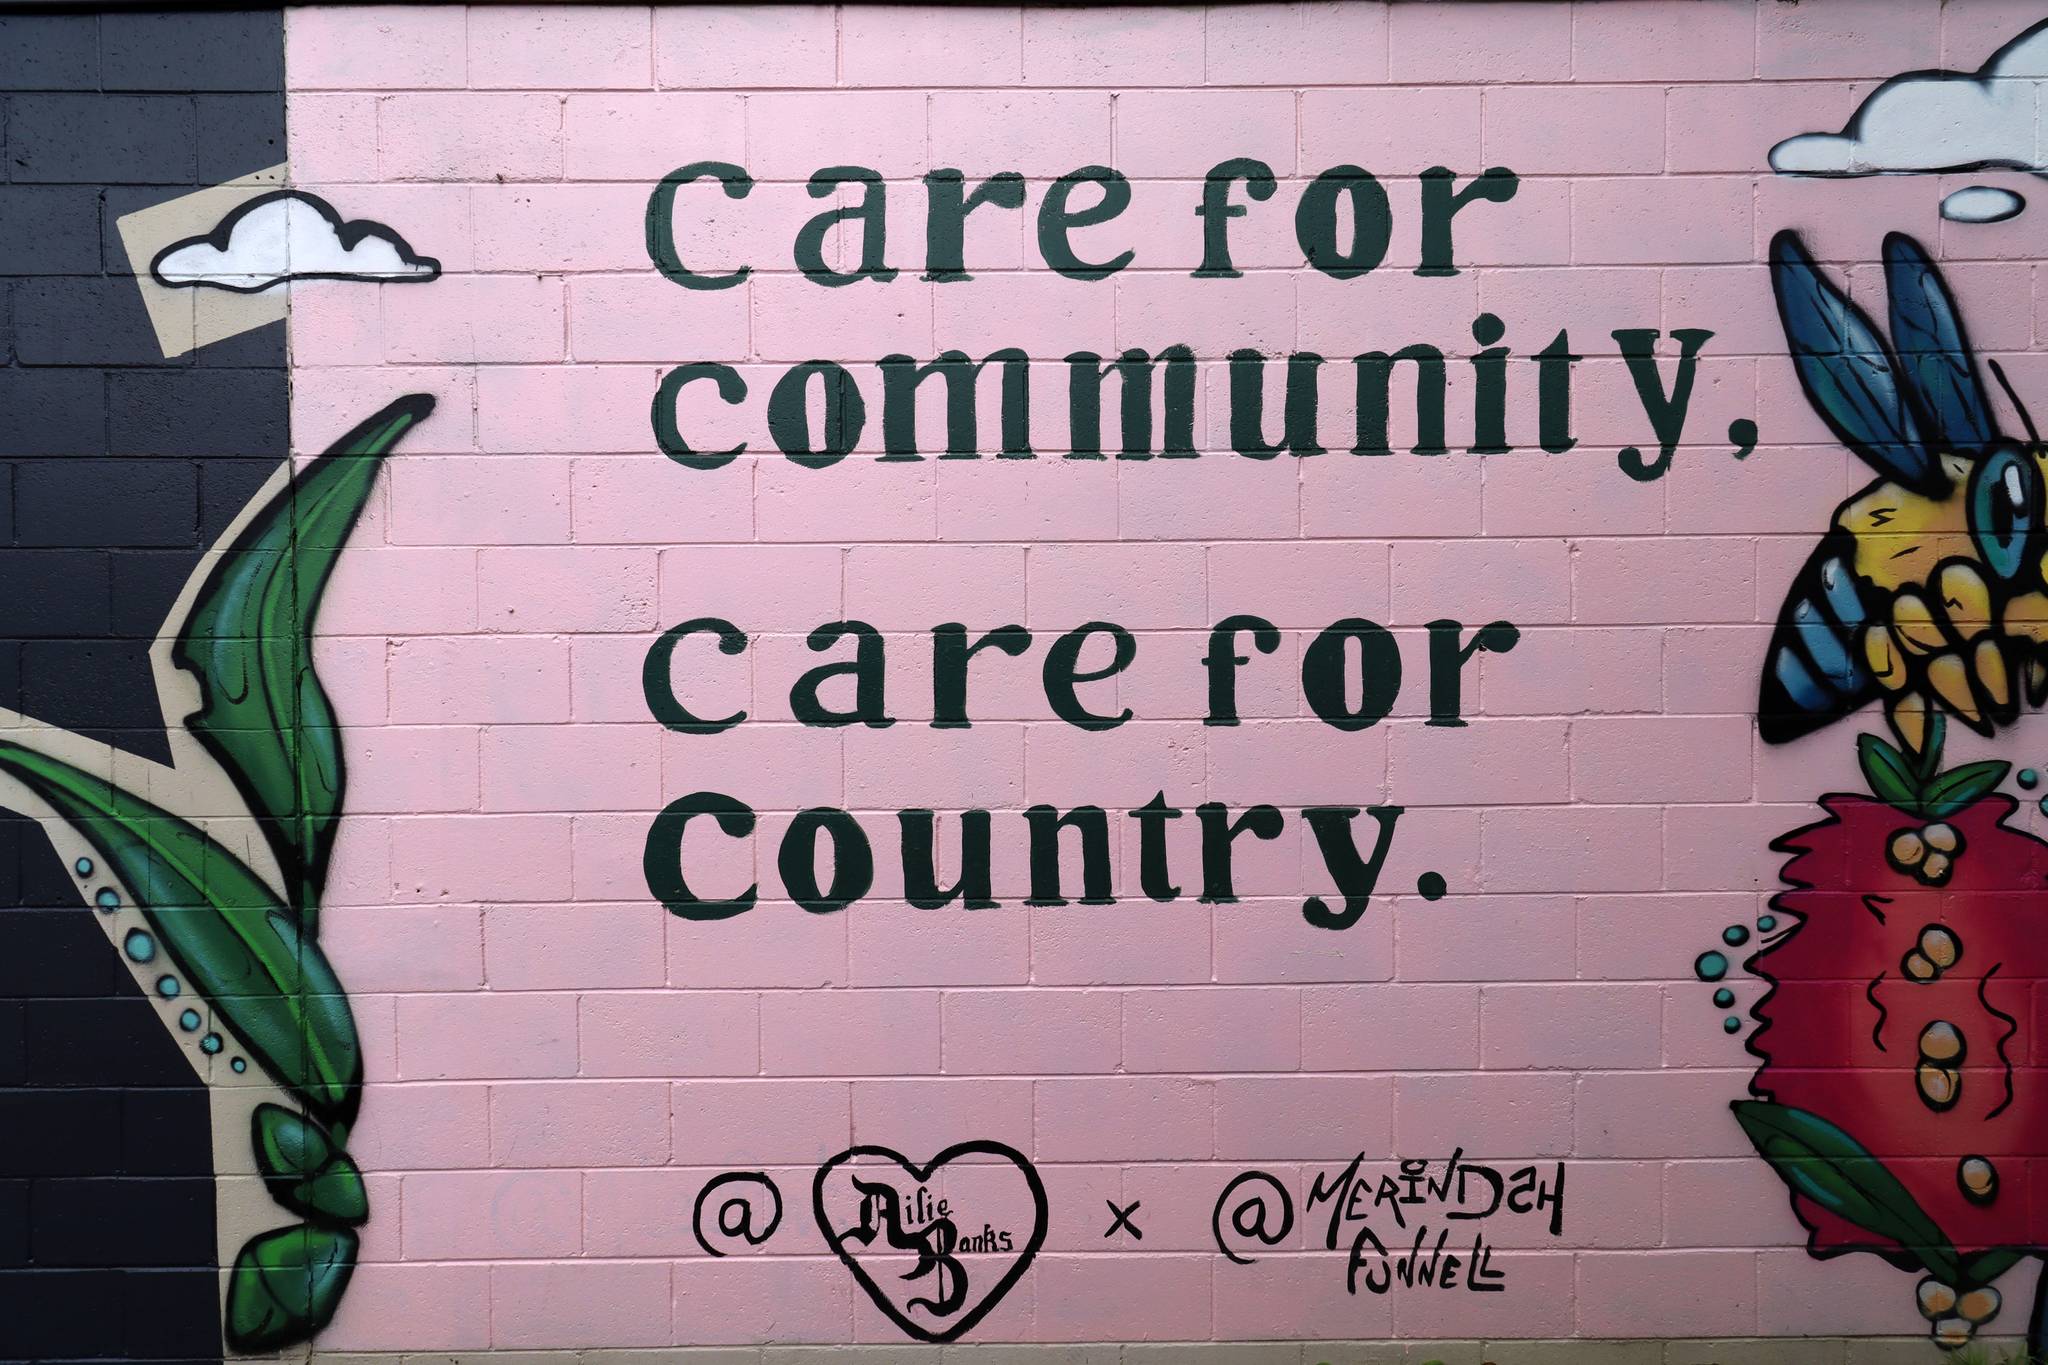 Ailie Banks, Merindah Funnell&mdash;Care for Community, Care for Country